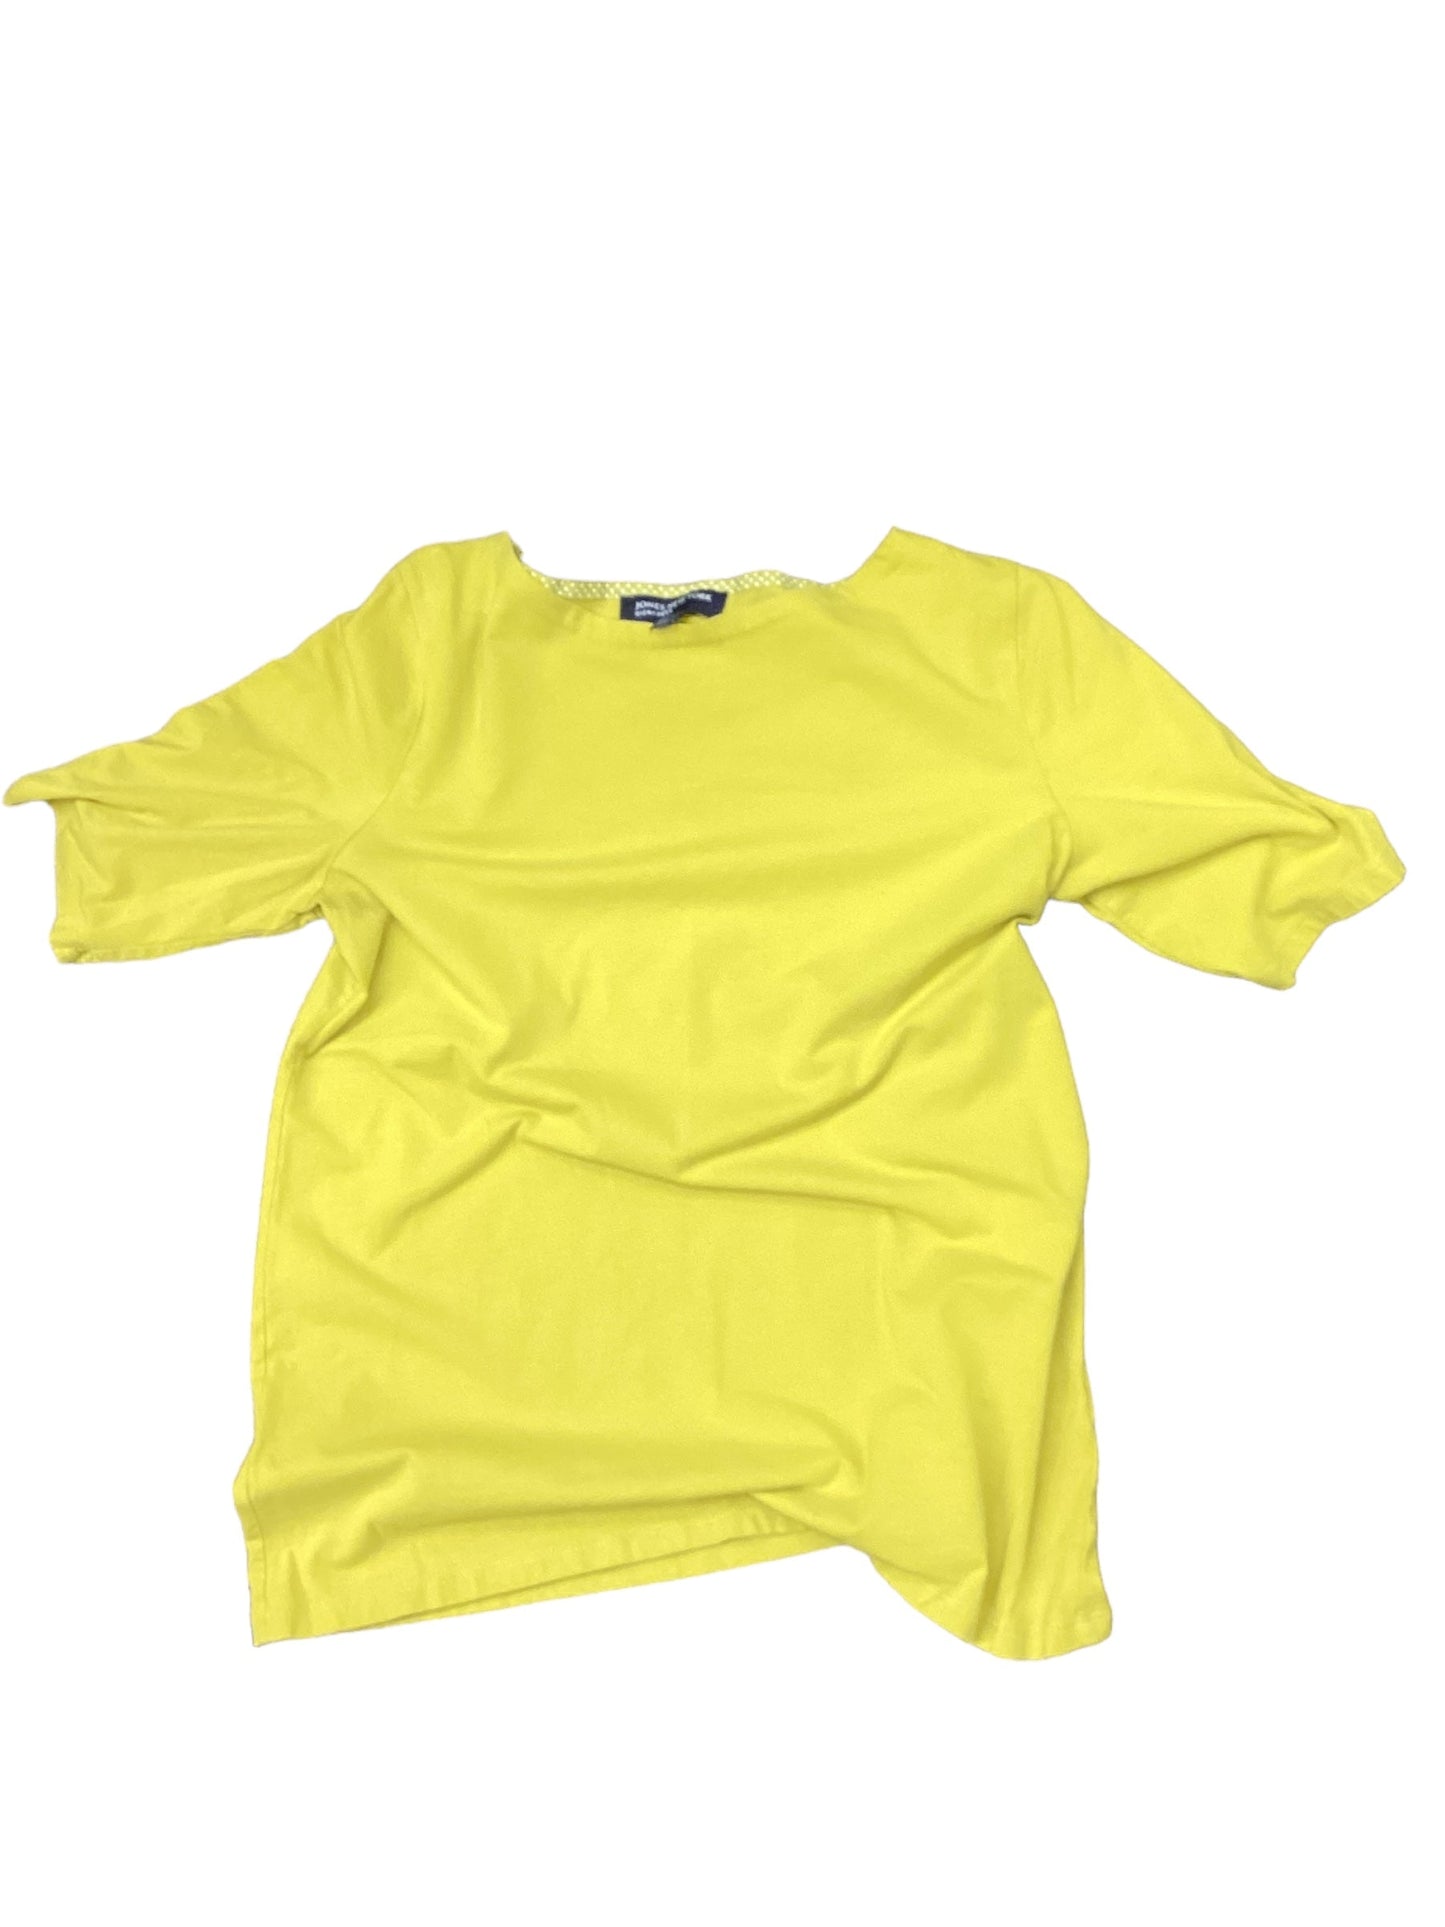 Yellow Top Short Sleeve Jones New York, Size L